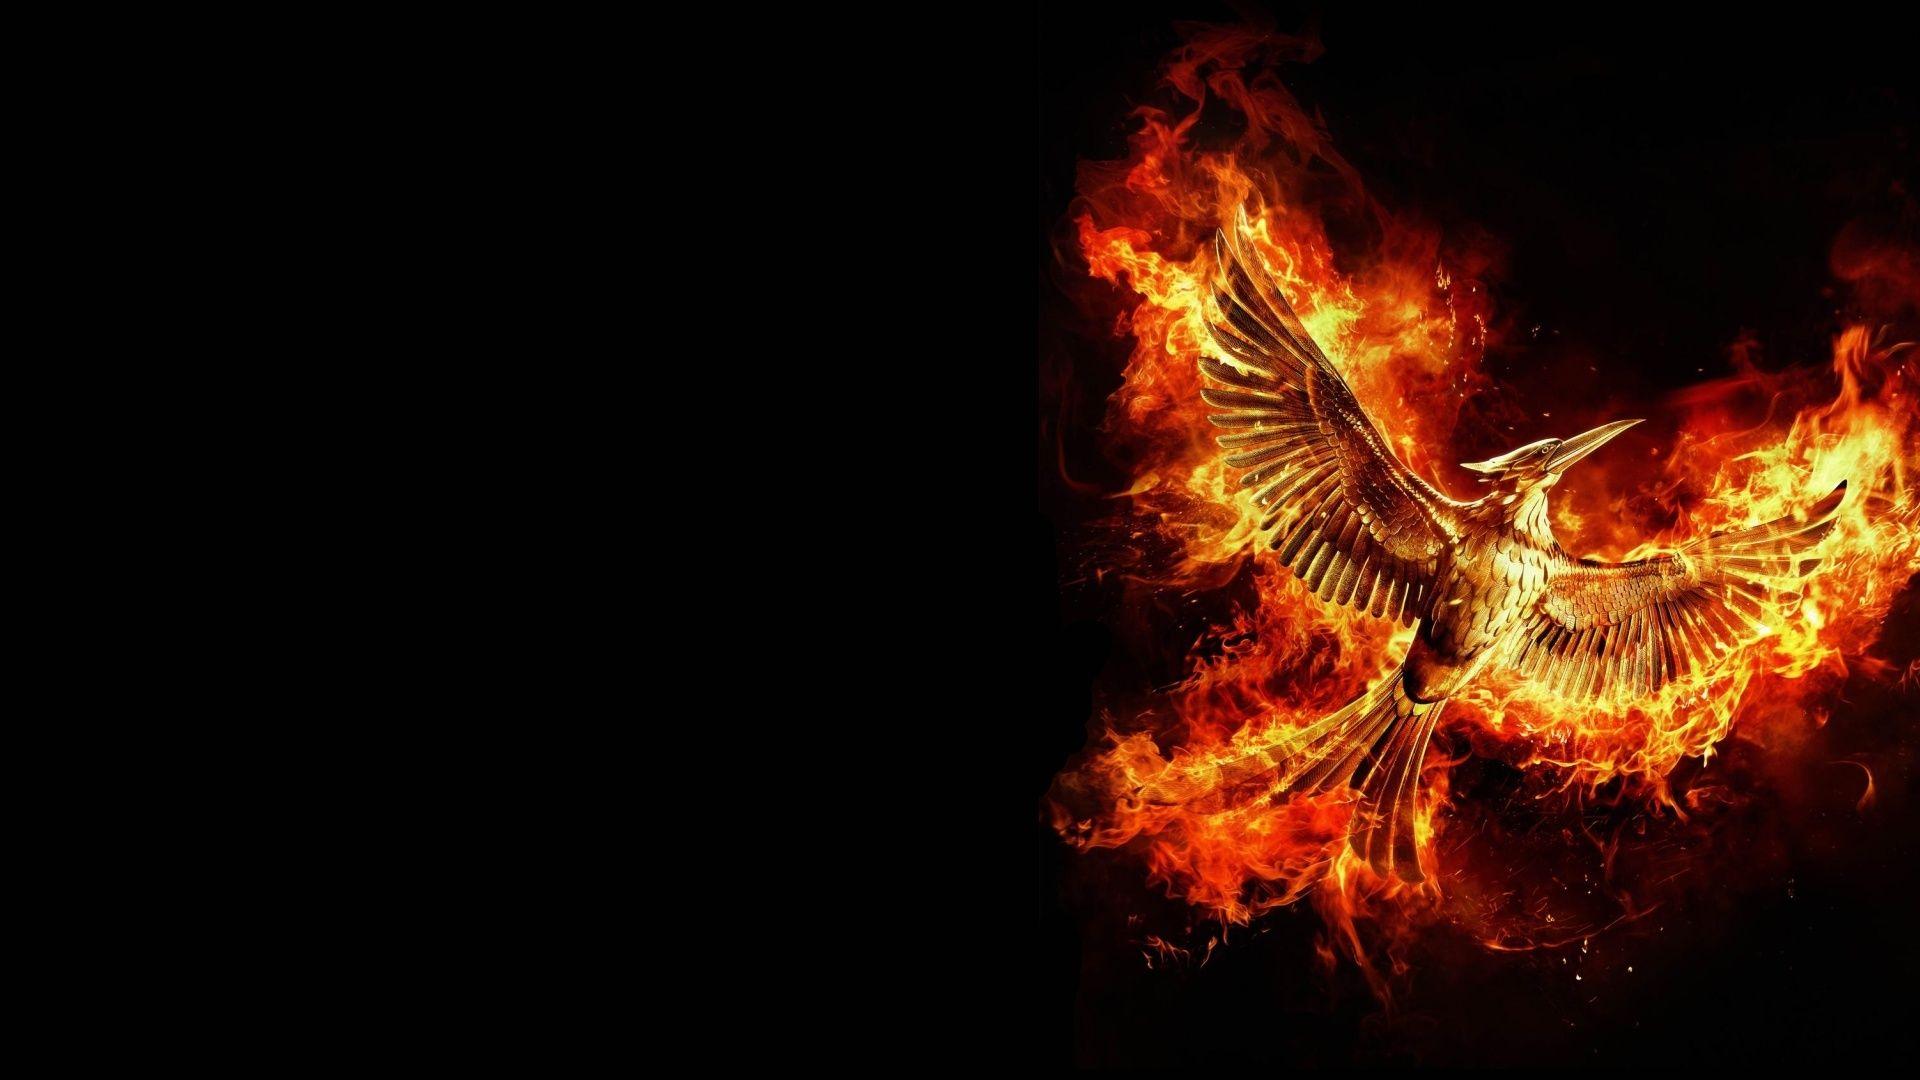 Mockingjay Logo - Logo The Hunger Games Mockingjay Part 2 - The Hunger Games Photo ...